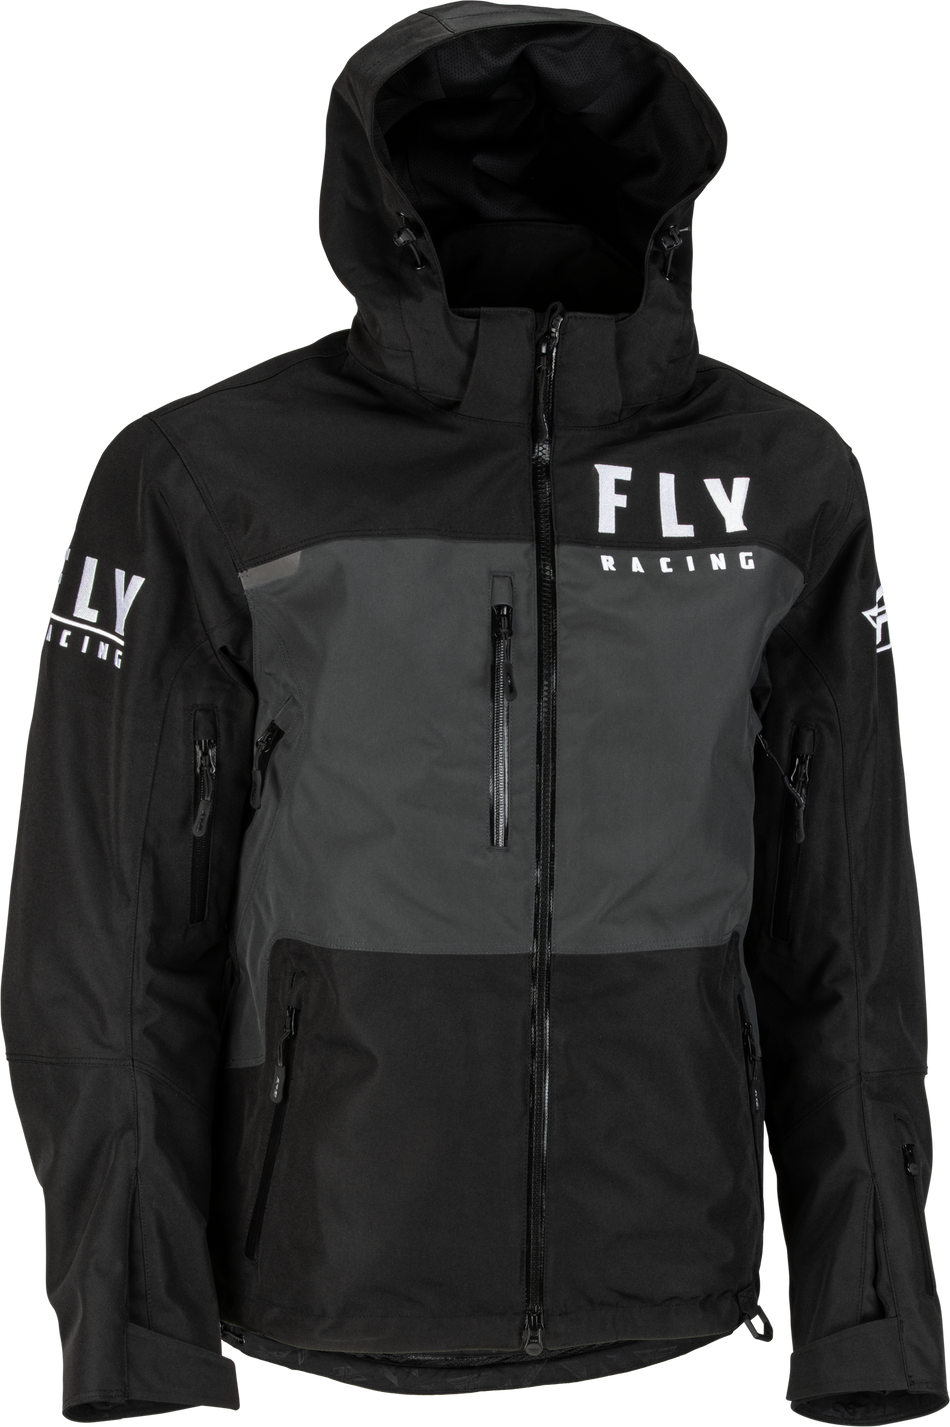 FLY RACING Carbon Jacket Black/Grey Sm 470-4133S